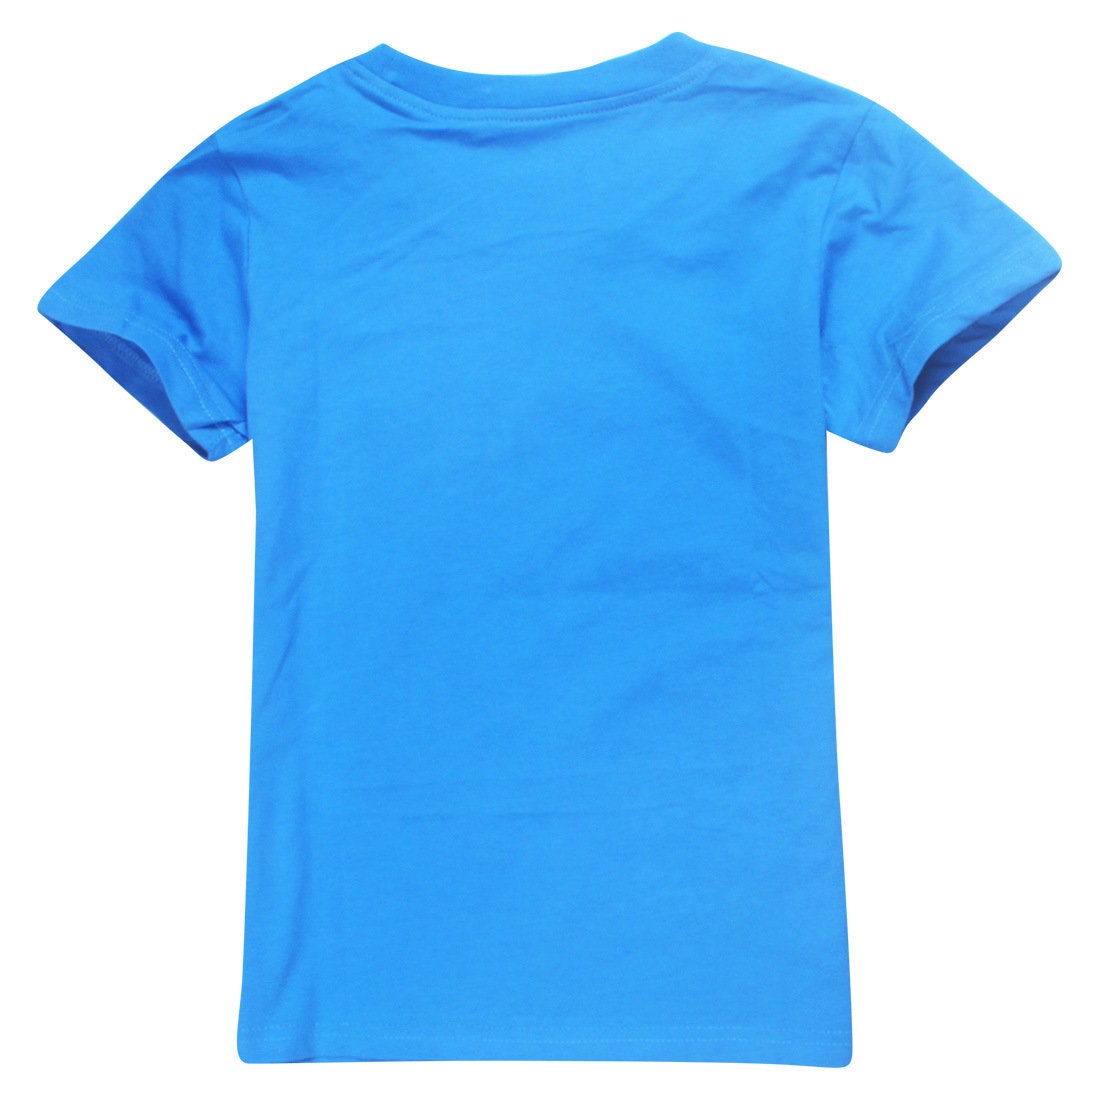 Roblox T-SHIRT for Children Size- 130-150 Blue 